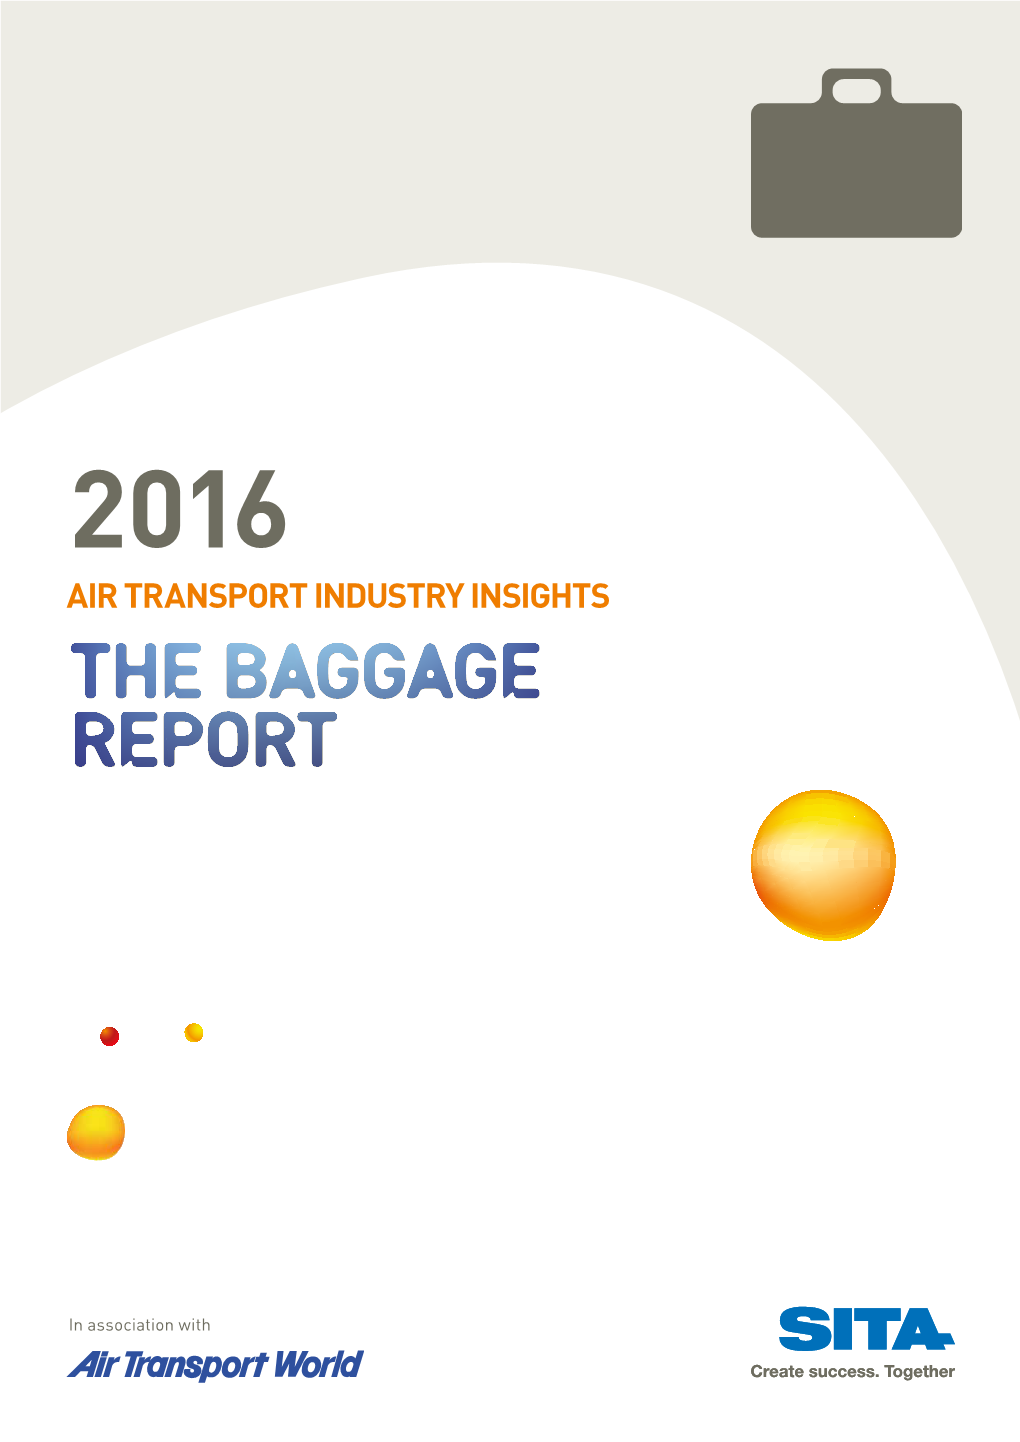 Air Transport Industry Insights